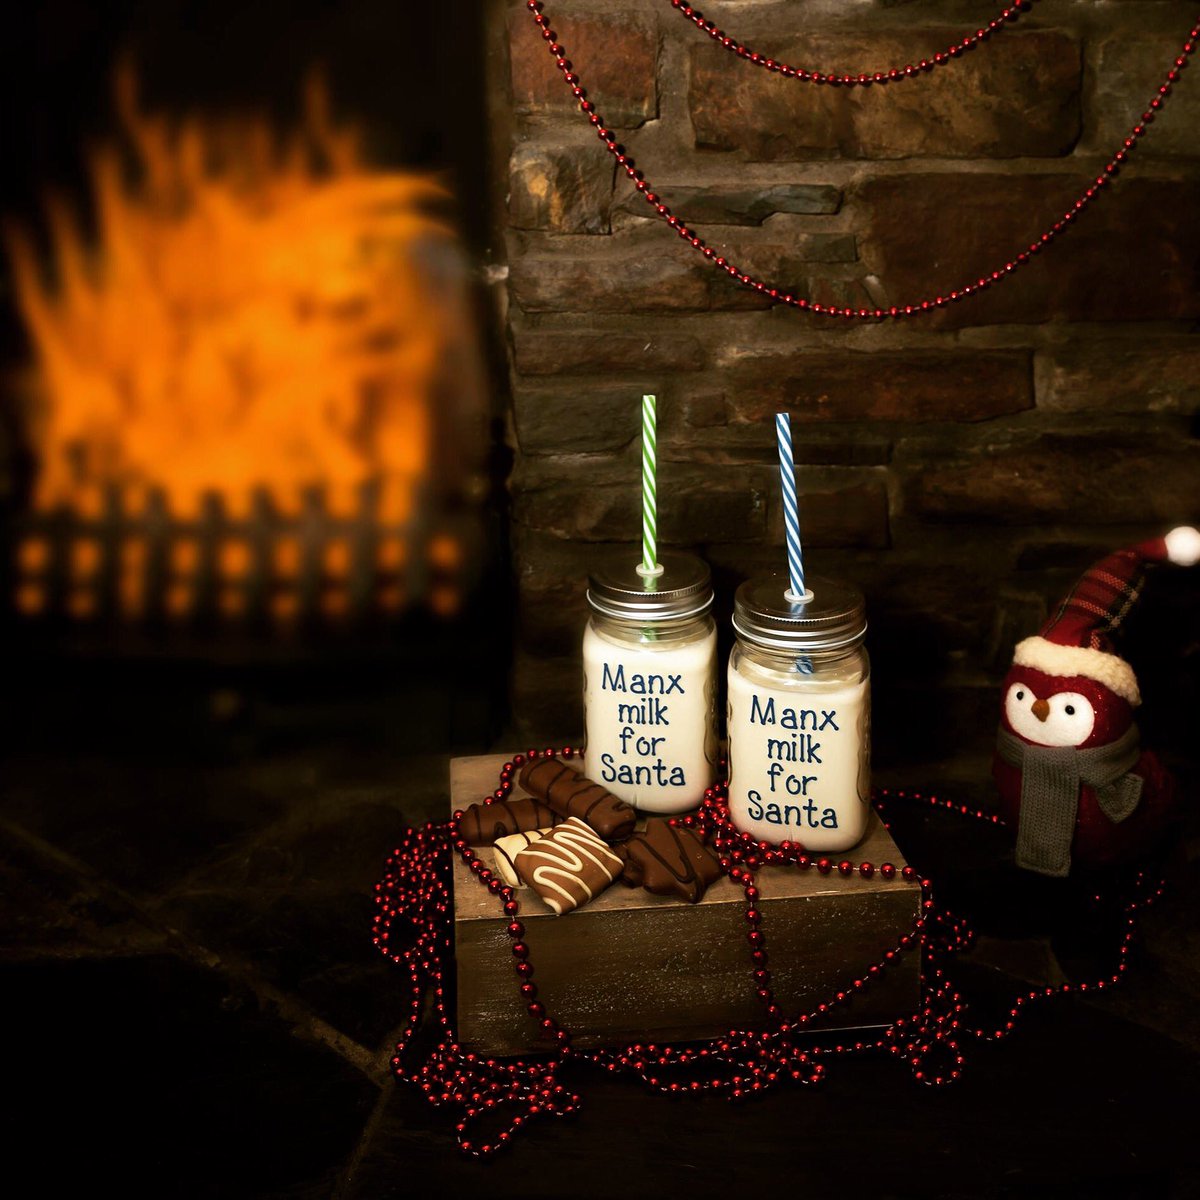 Don't forget Santa's favorite drink! #manxmilk #christmas #milk #dairy